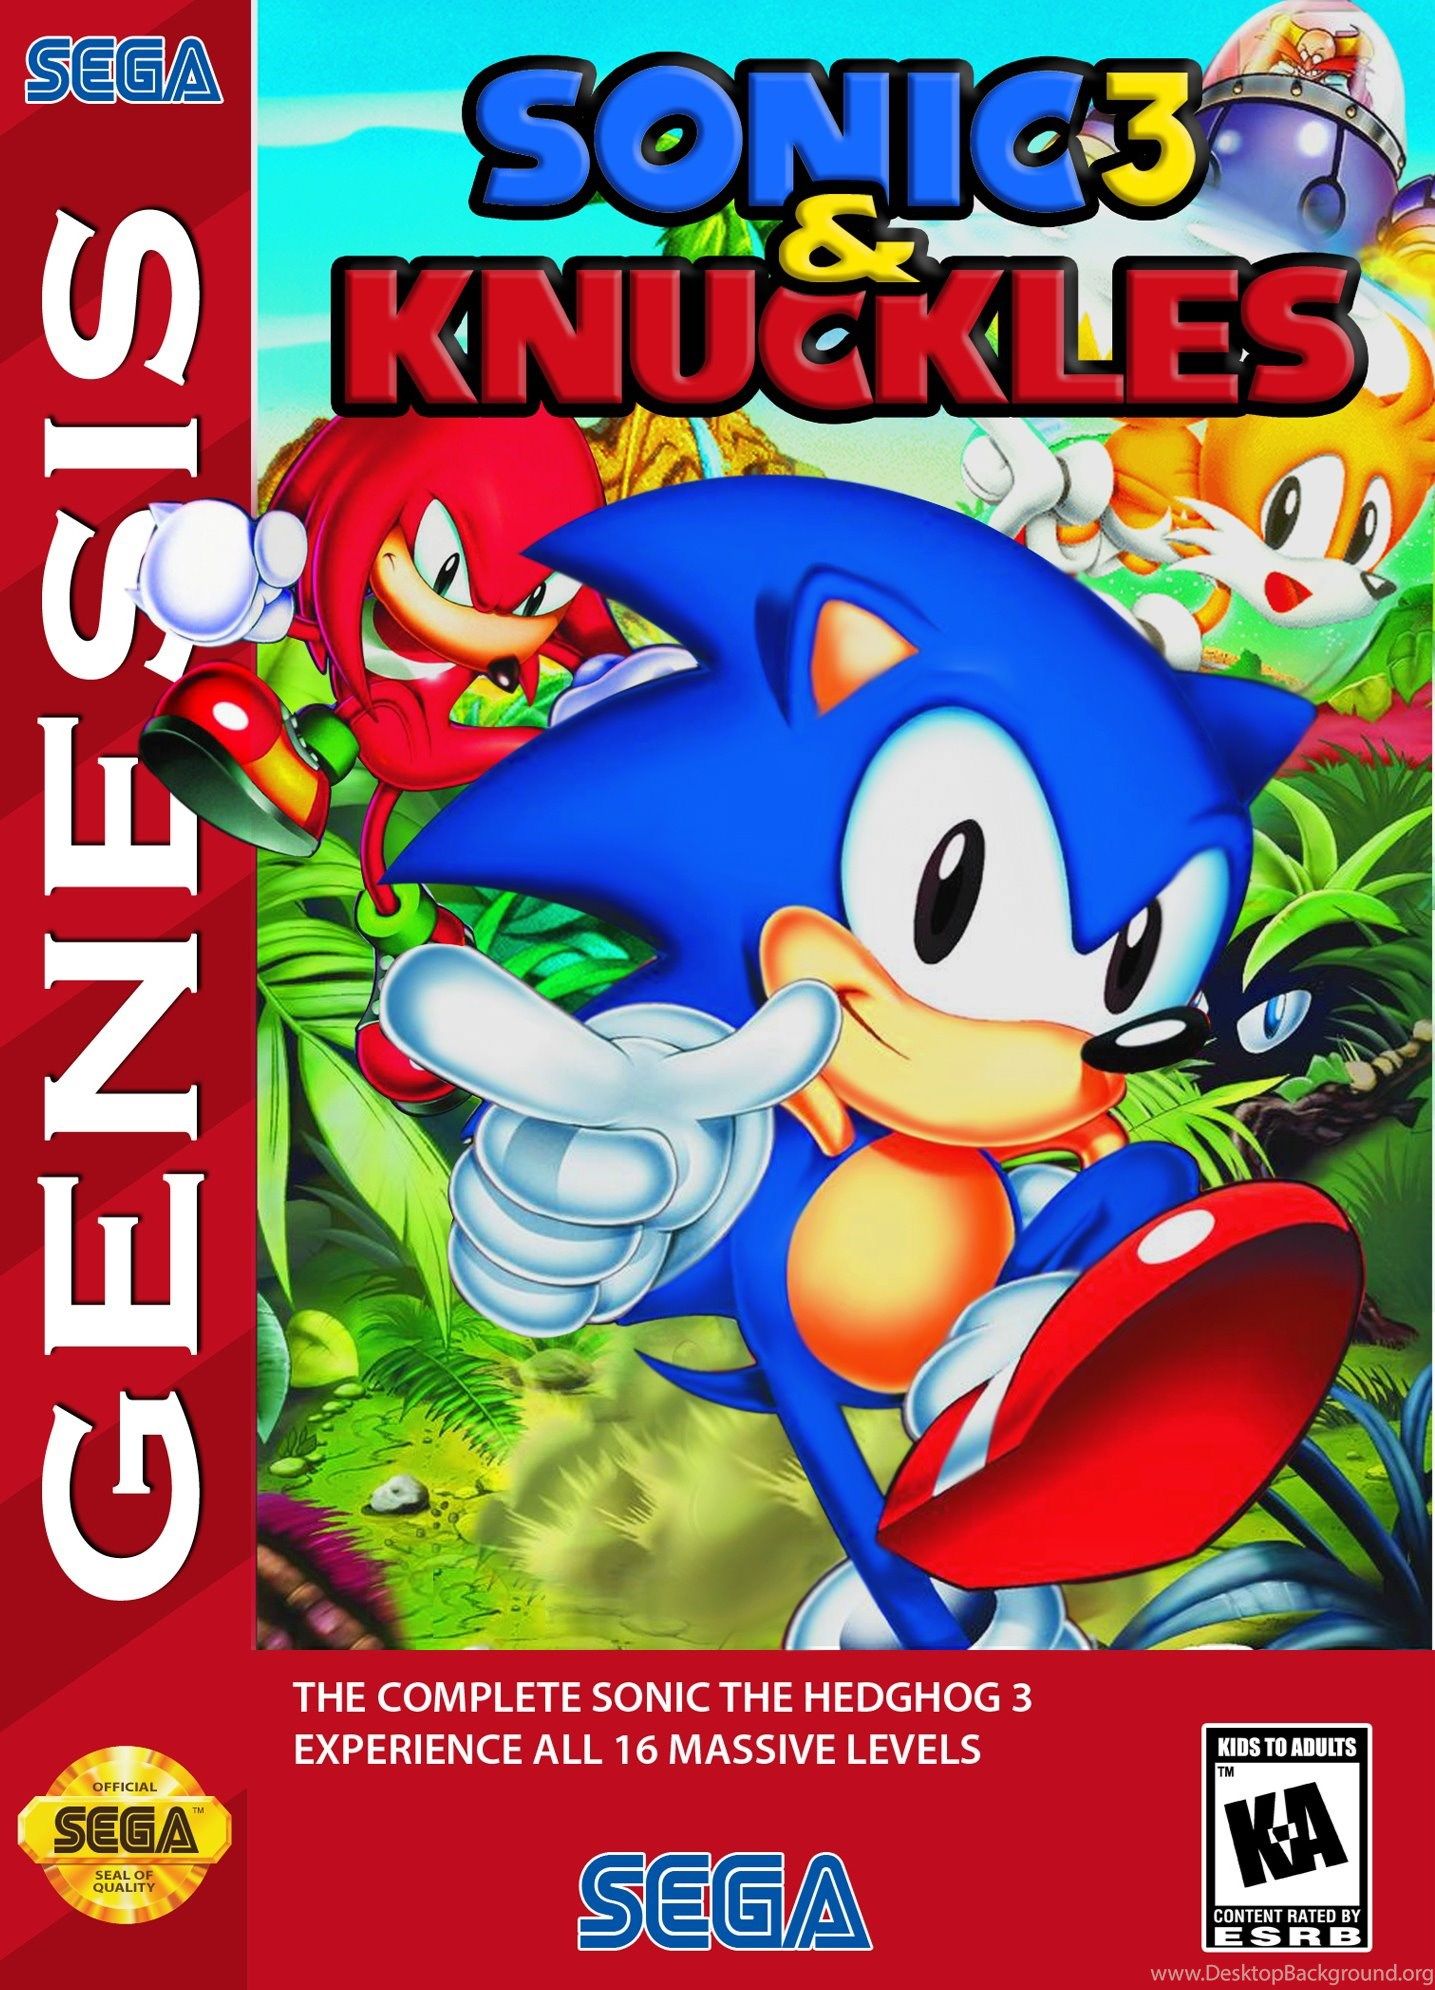 Sonic The Hedgehog 3 & Knuckles Info, Boxart, Banners, Fanart. Desktop Background